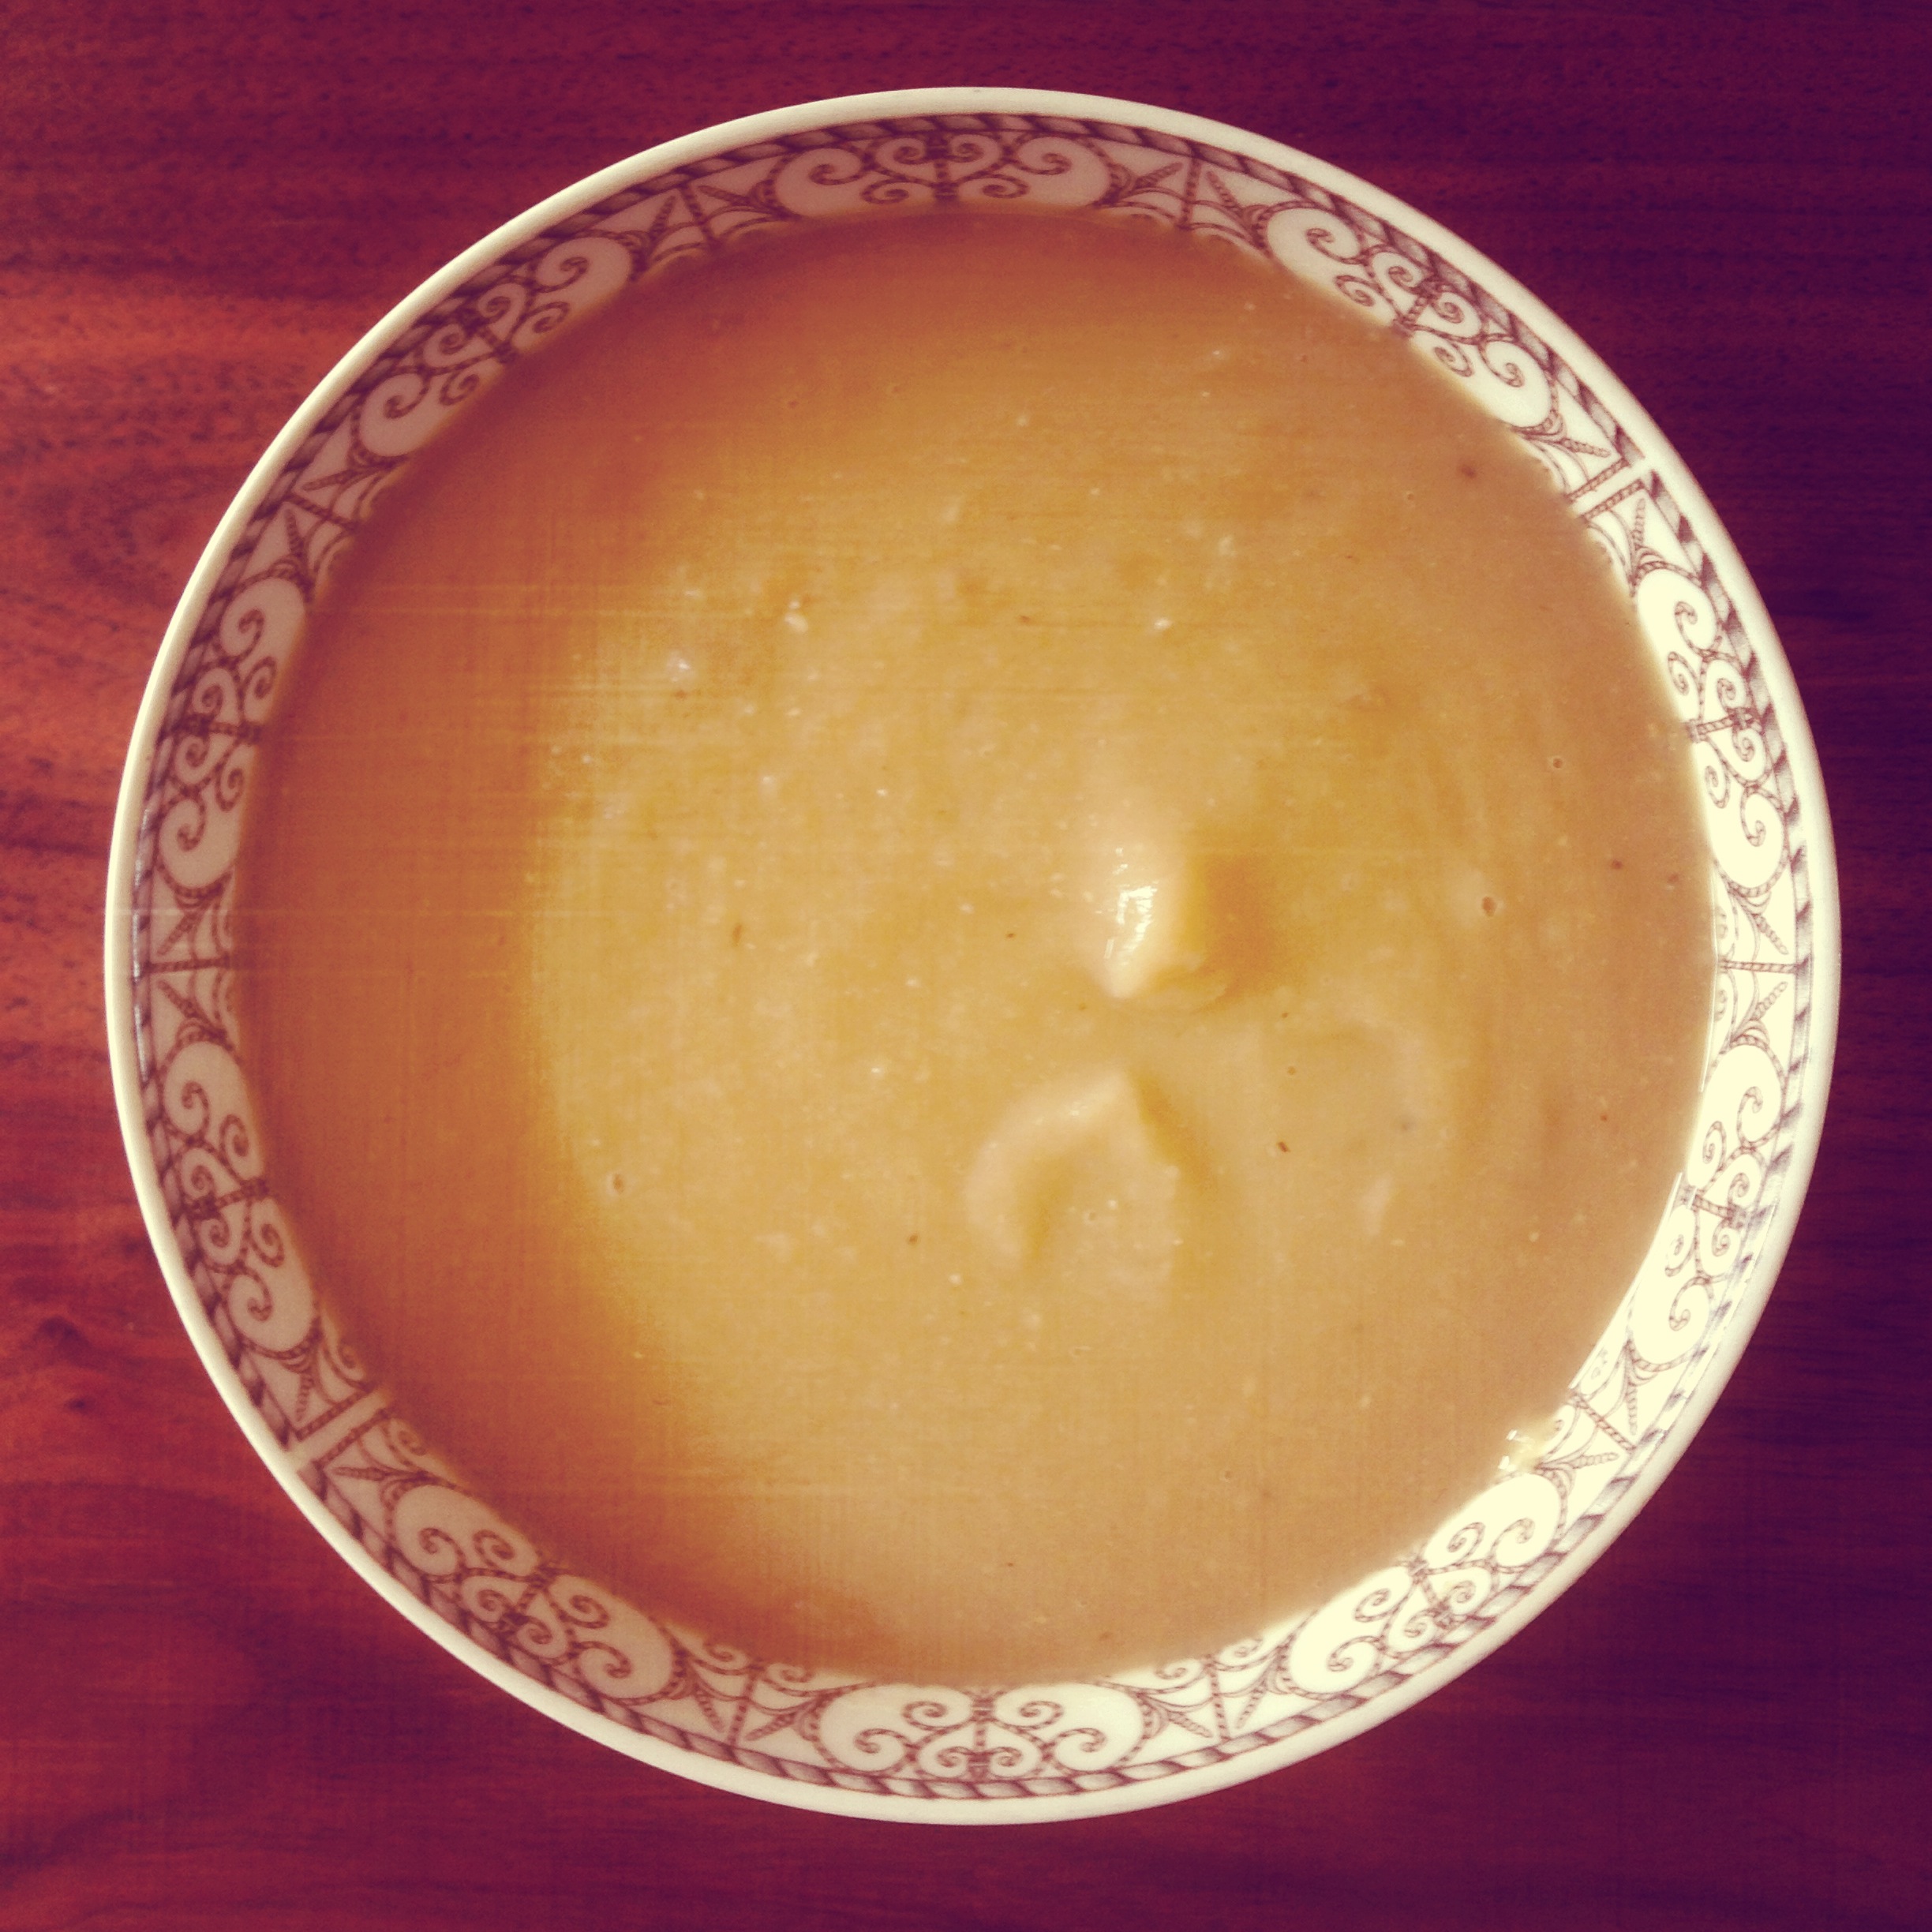 Roasted Parsnip Soup